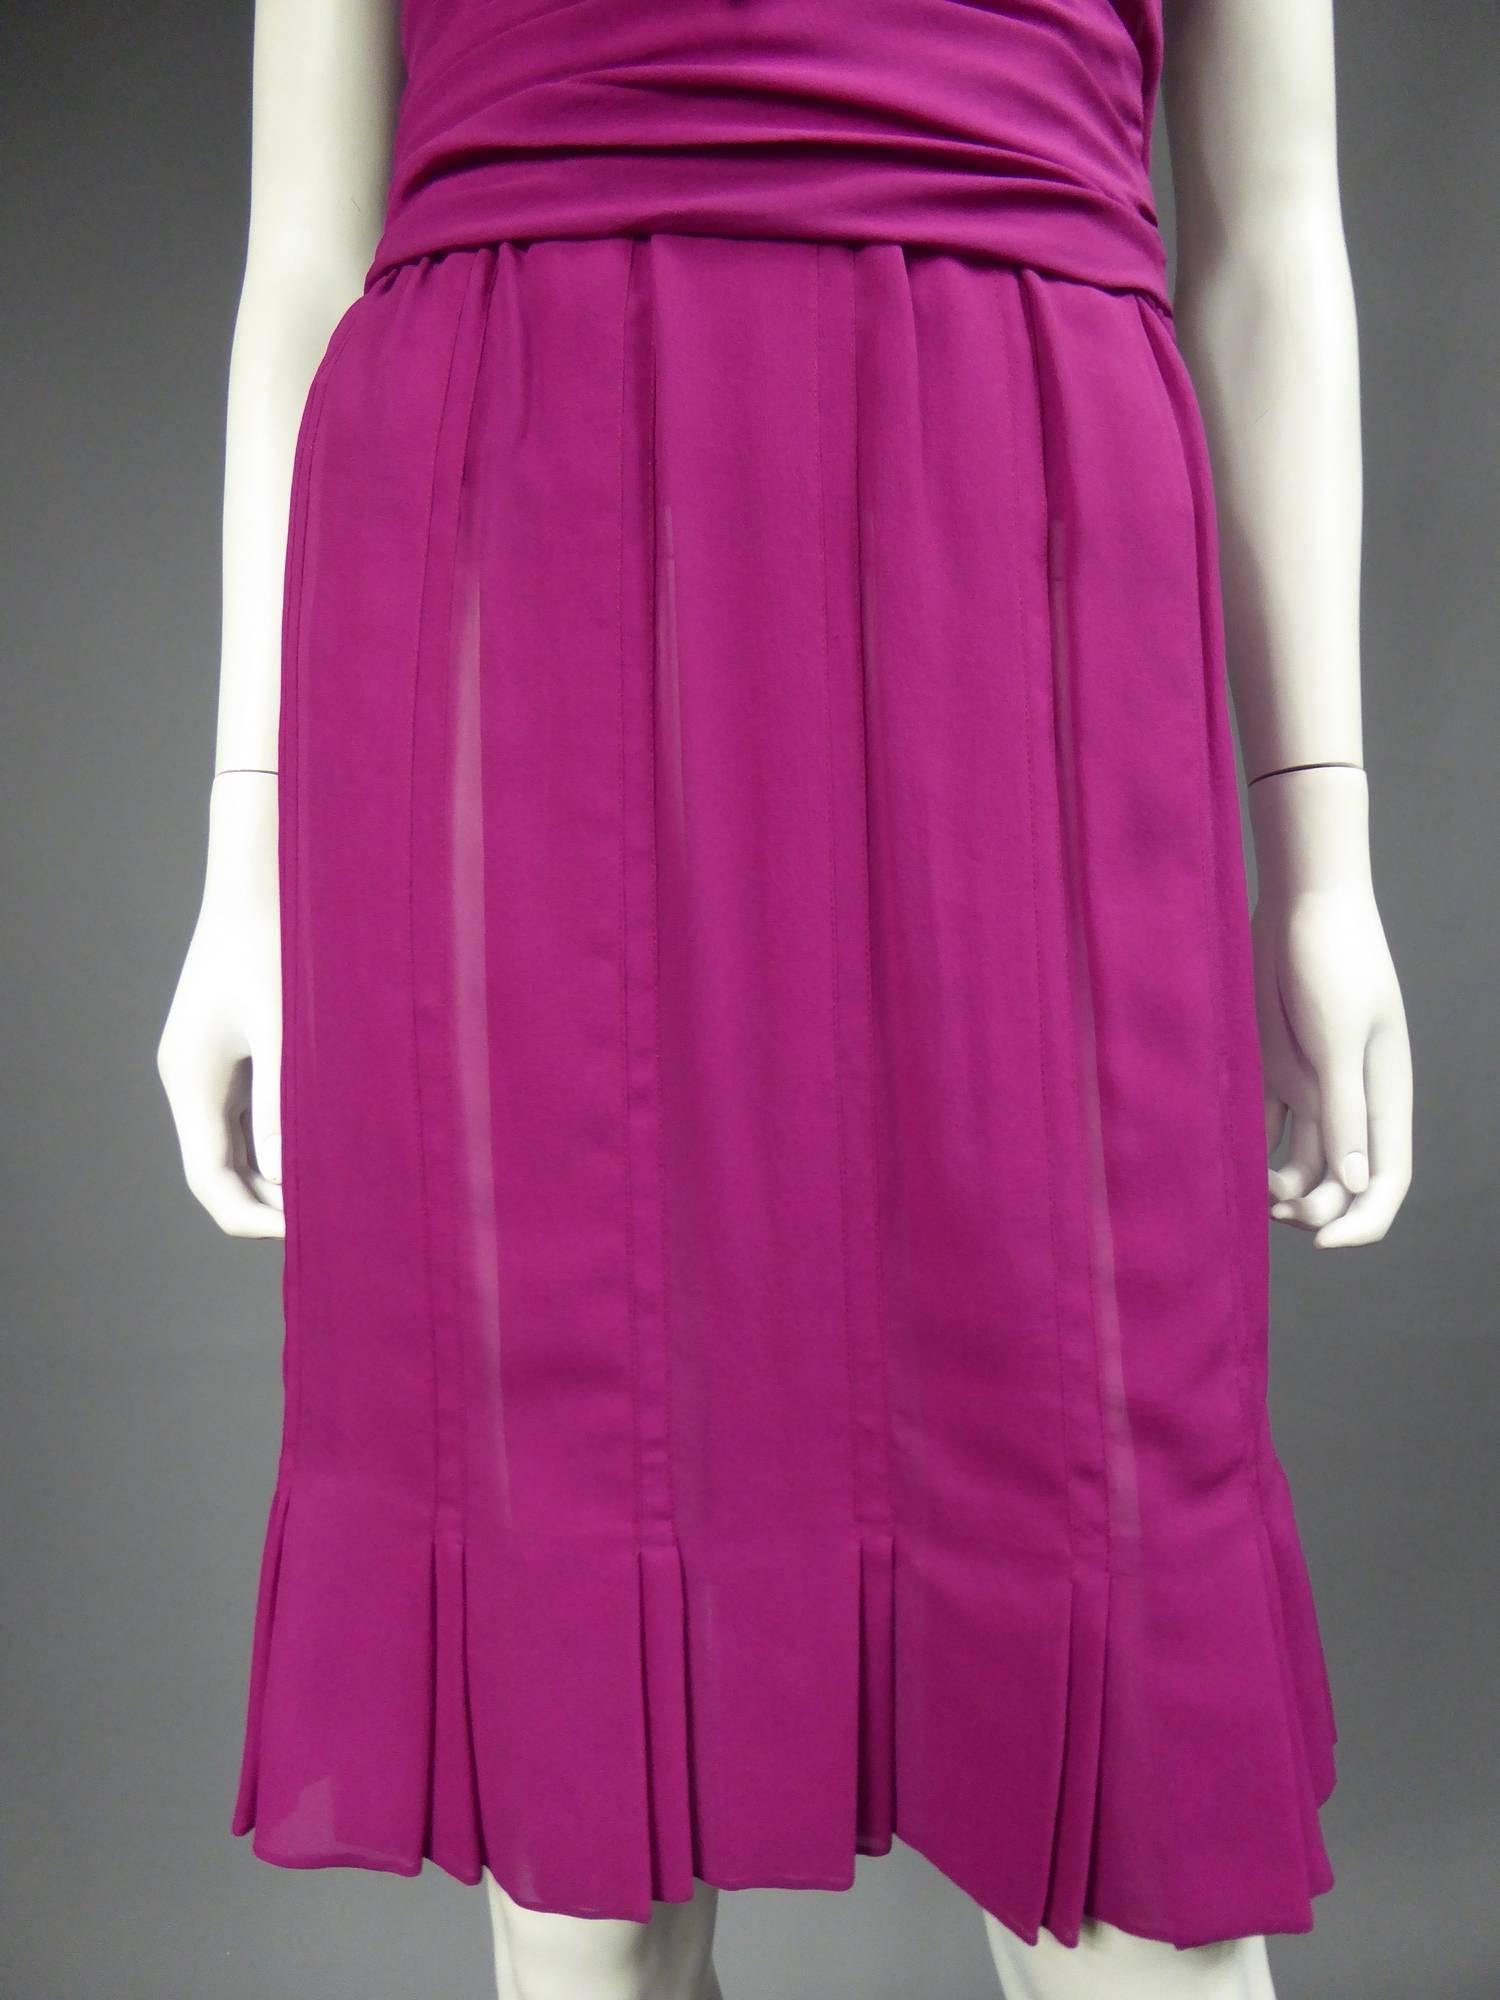 Christian Dior - Robe haute couture en mousseline de soie rose, circa 1989 - 1990 en vente 6